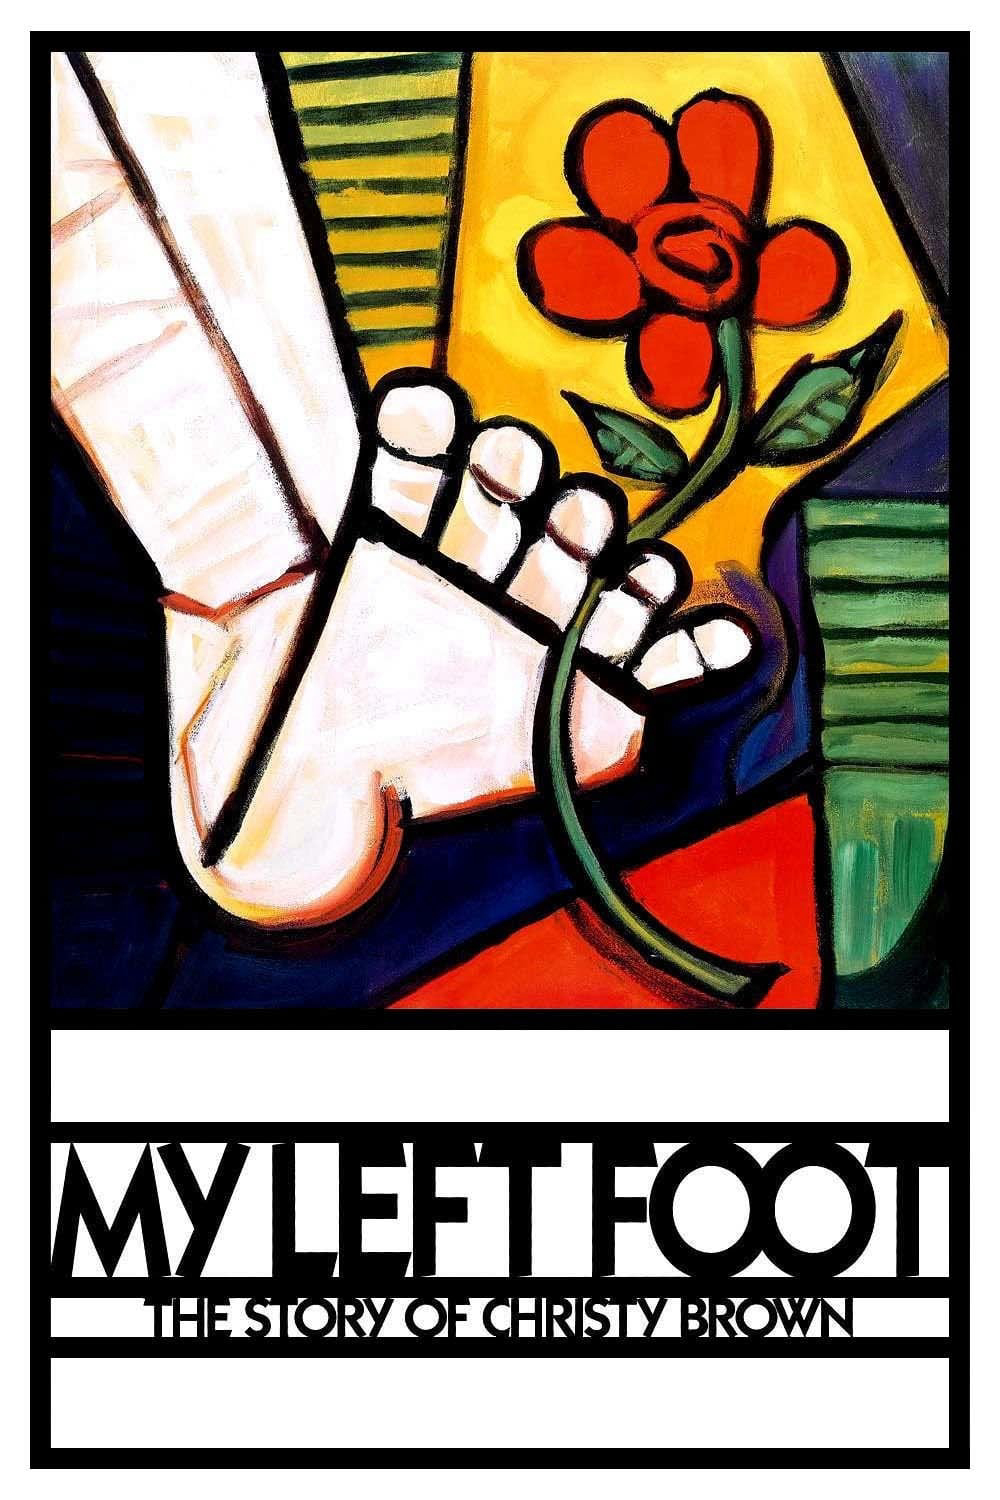 Poster Phim Câu Chuyện Về Christy Brown (My Left Foot: The Story of Christy Brown)